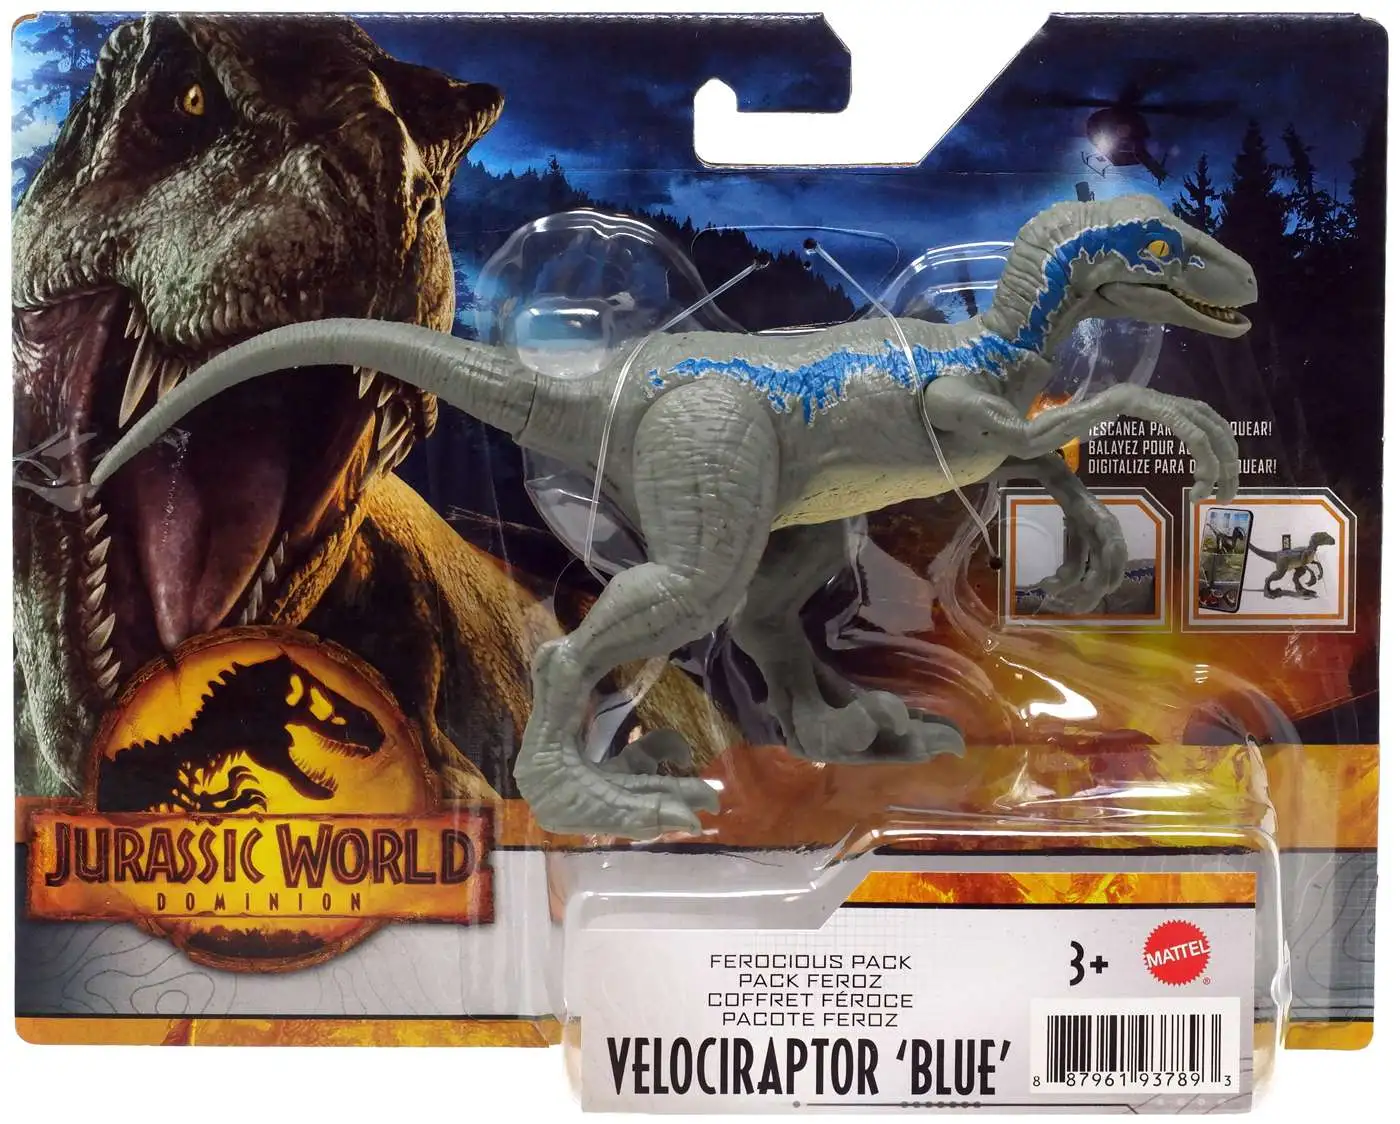 Jurassic World Dominion Ferocious Pack Velociraptor 'Blue' Action Figure